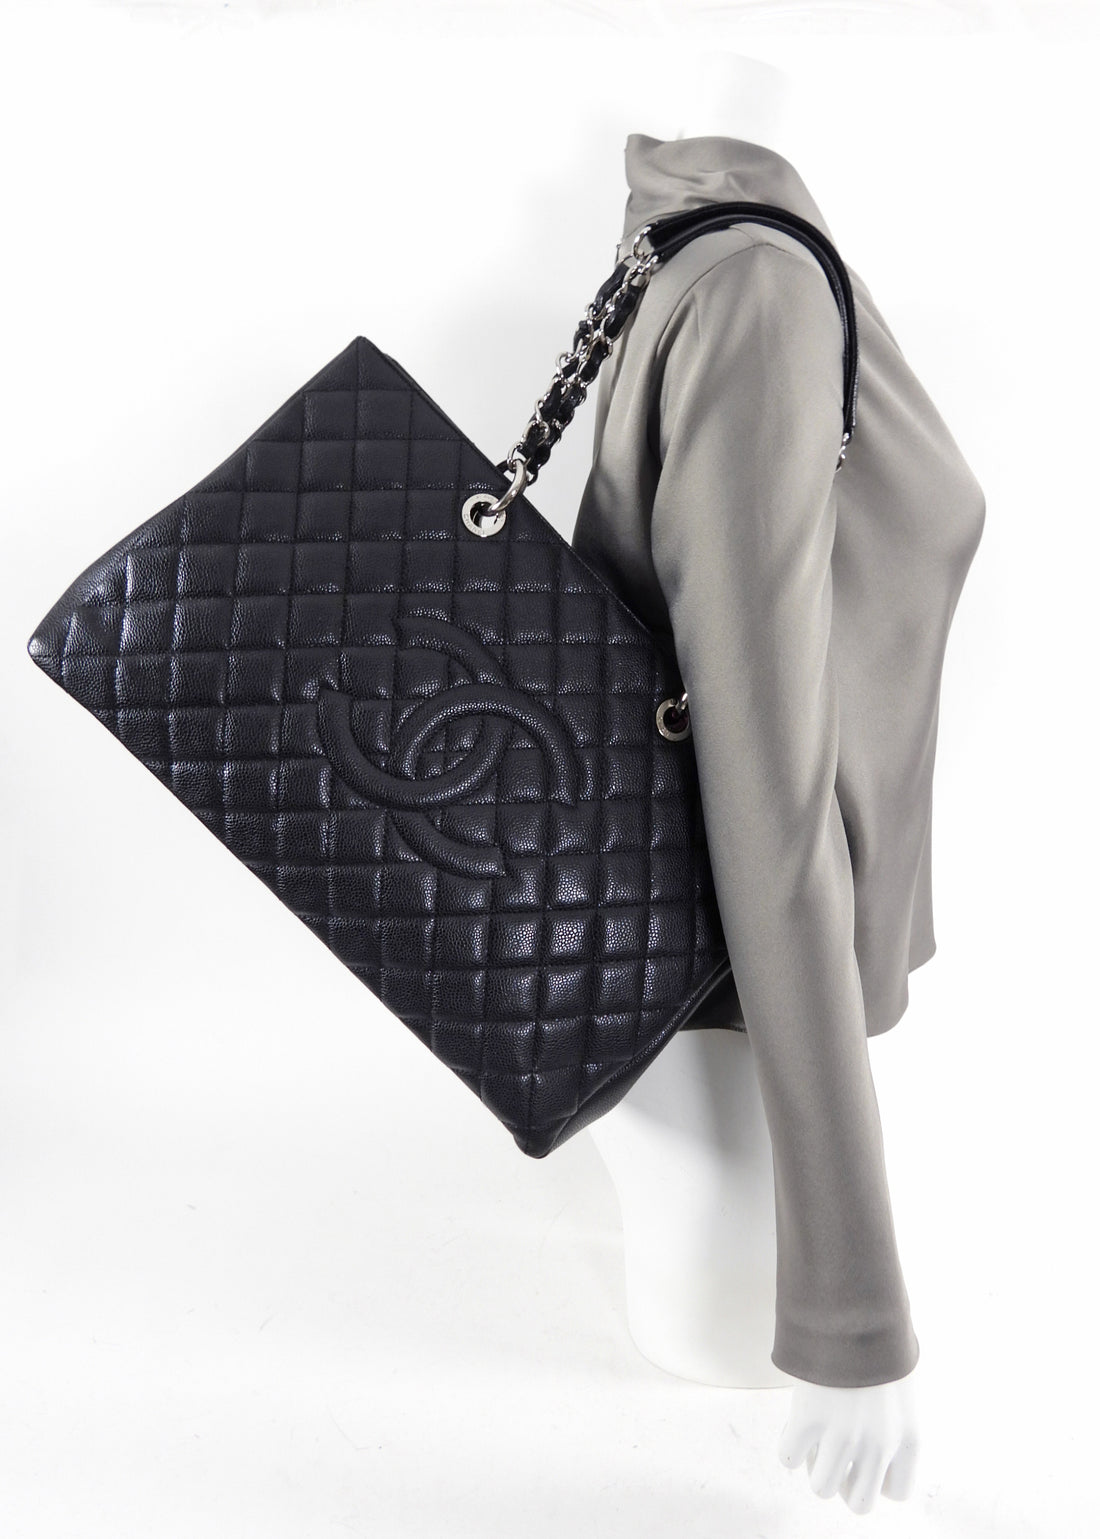 Chanel Black Caviar Leather GST Grand Shopping Tote XL SHW – I